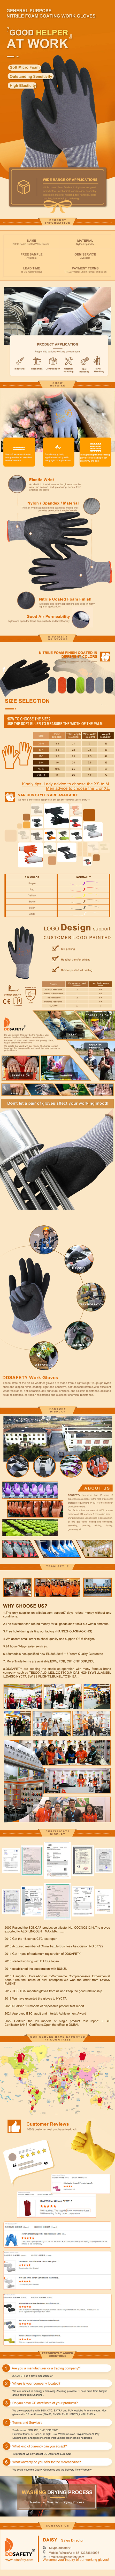 Maxiflex Gloves - Breathable Gloves - DNN151 Maxiflex Gloves - Breathable Gloves - DNN151 gloves,Maxiflex Gloves,Breathable Gloves